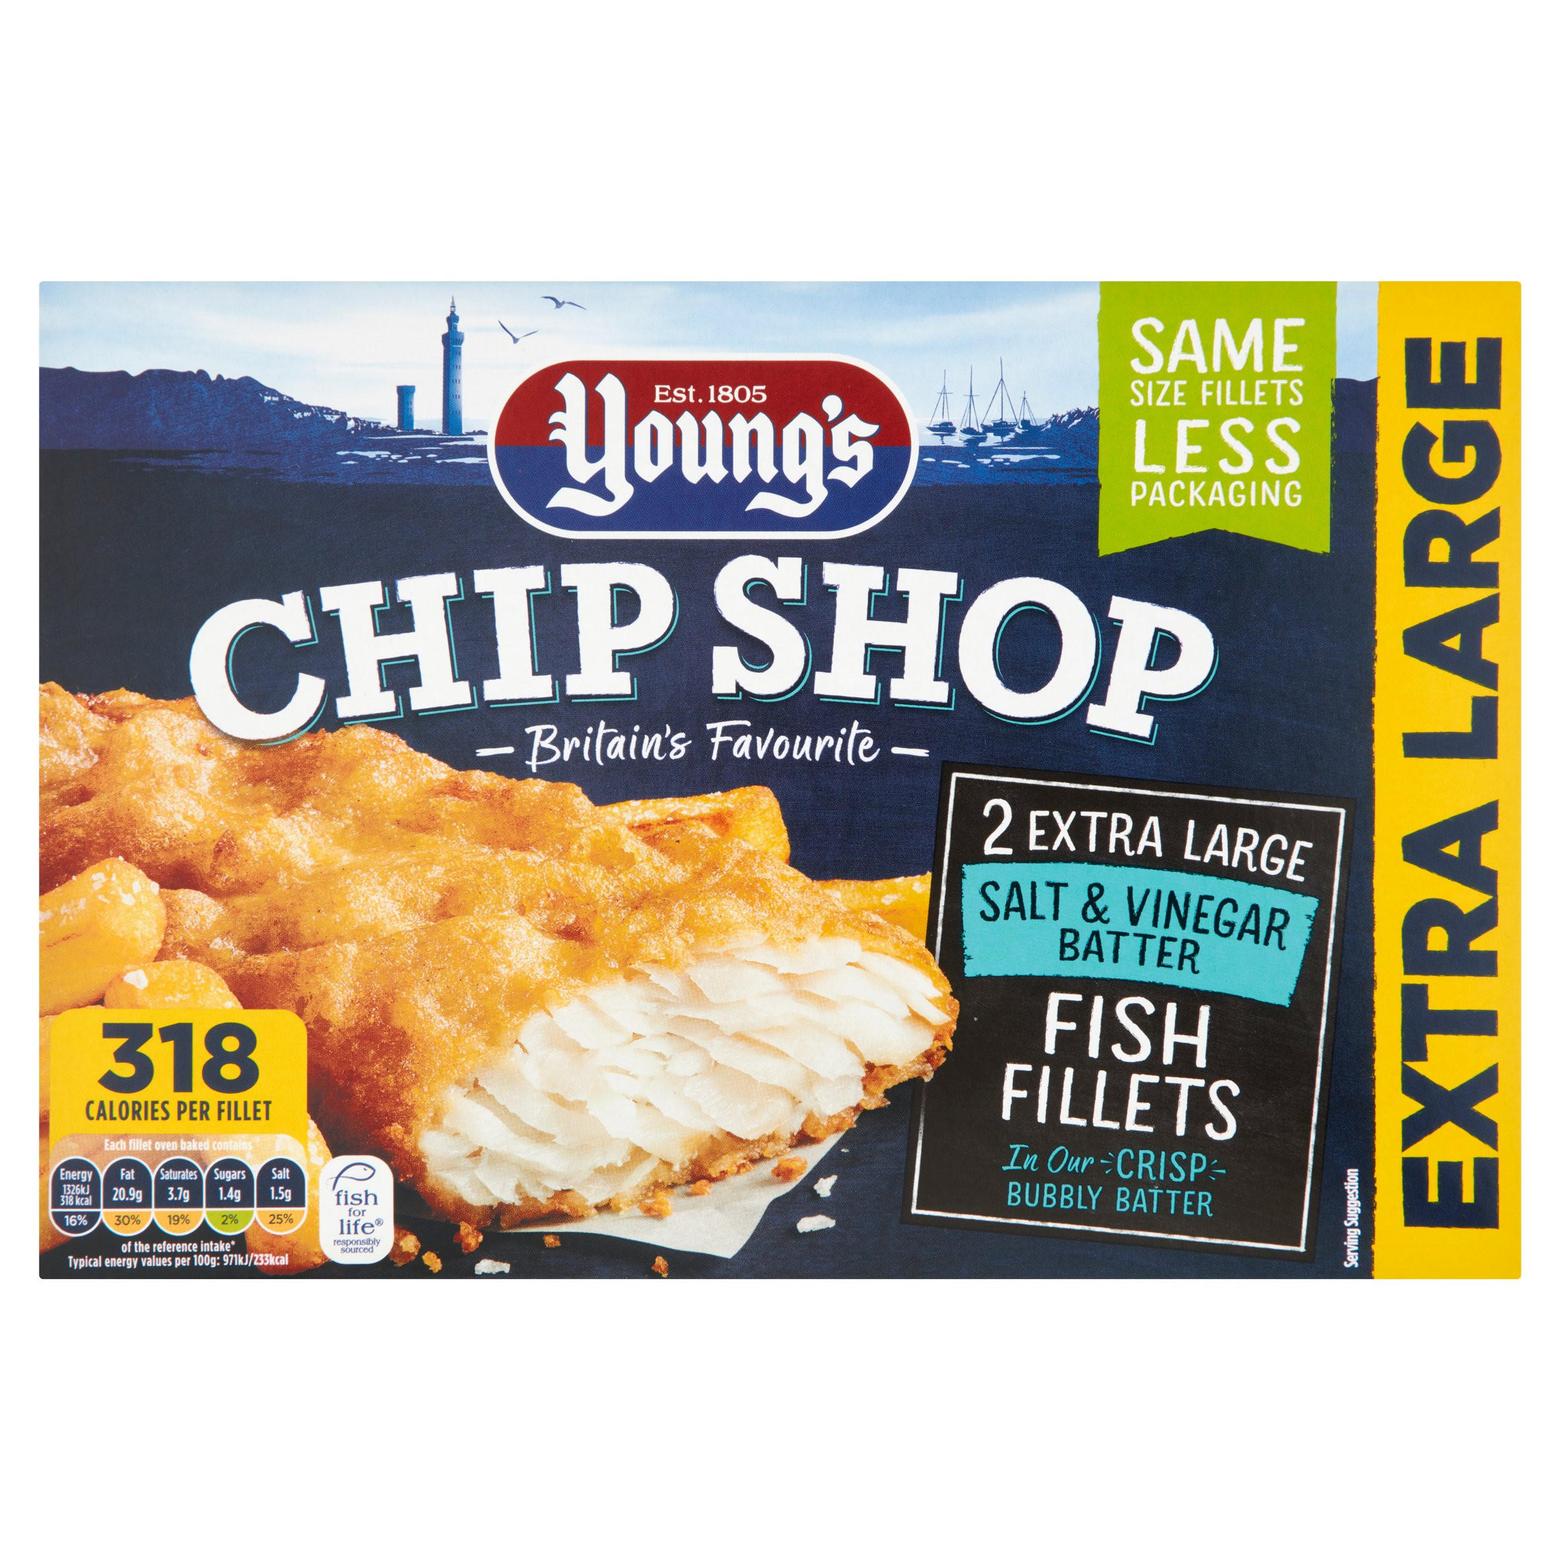 Young's Chip Shop 2 Extra Large Salt & Vinegar Batter Fish Fillets 300g offers at £1.75 in Iceland